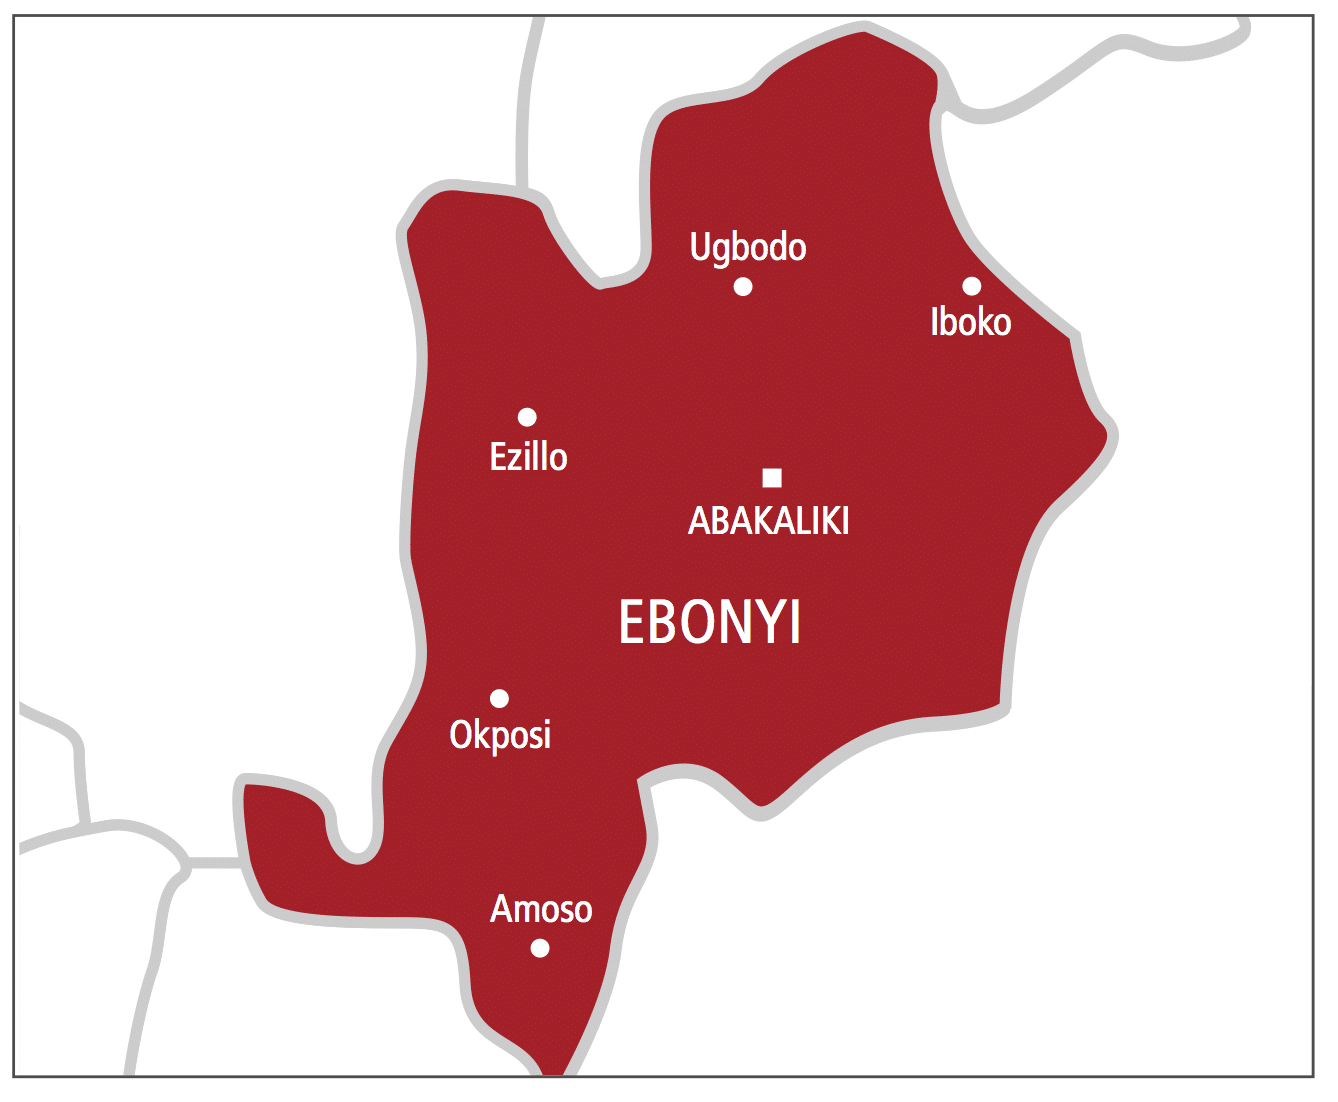 12 hospitalized as town union leadership tussle rocks Ebonyi community